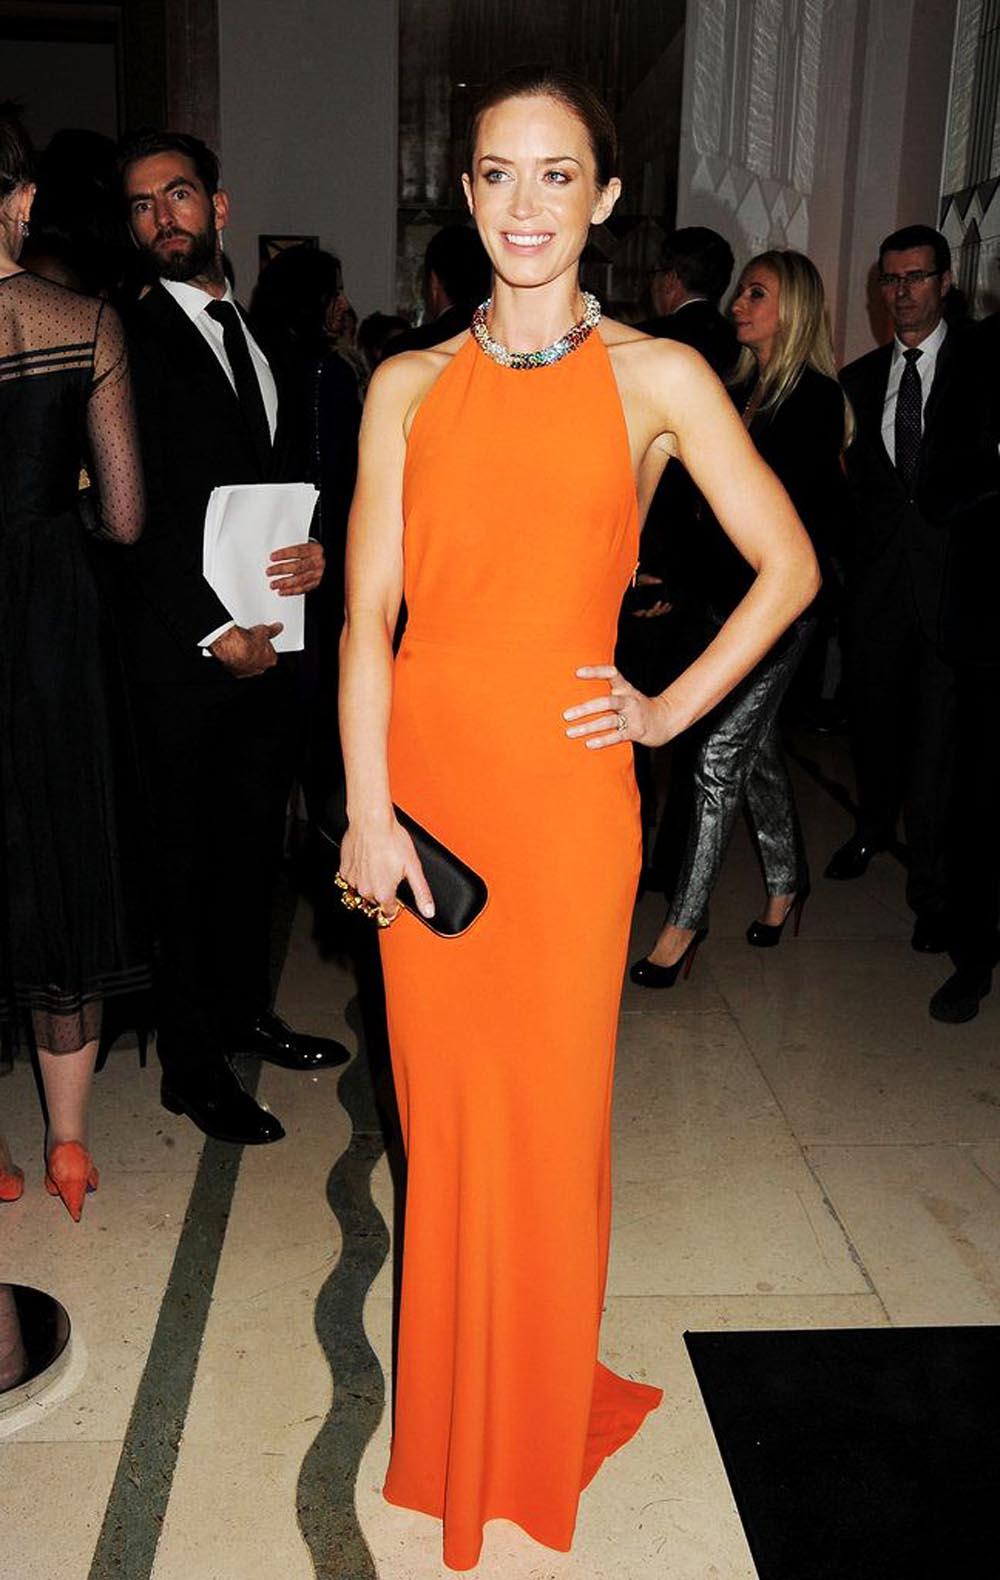 Women's New Alexander McQueen S/S 2013 Red Carpet Jeweled Orange Halter Stretch Dress 38 For Sale